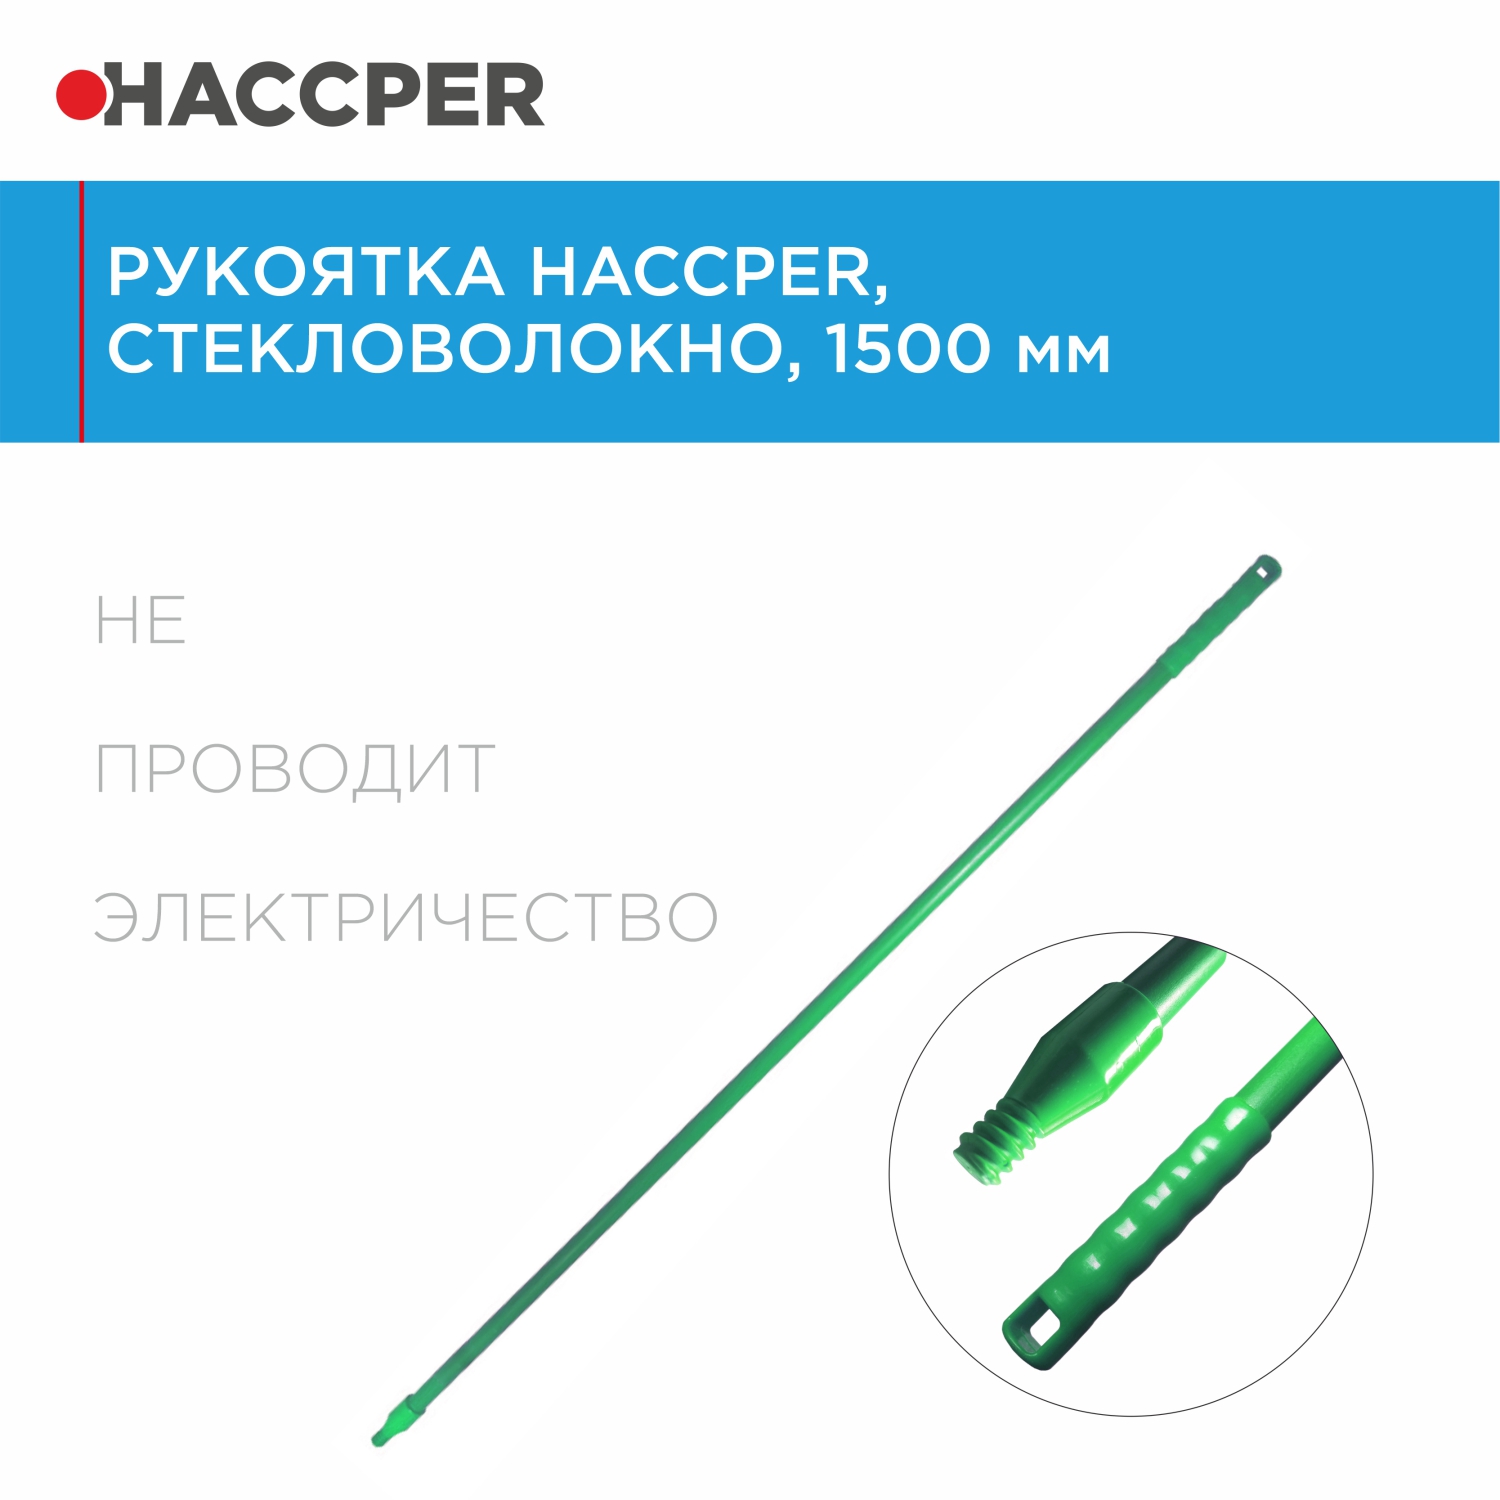 Рукоятка HACCPER стекловолокно, 1500 мм, зеленая